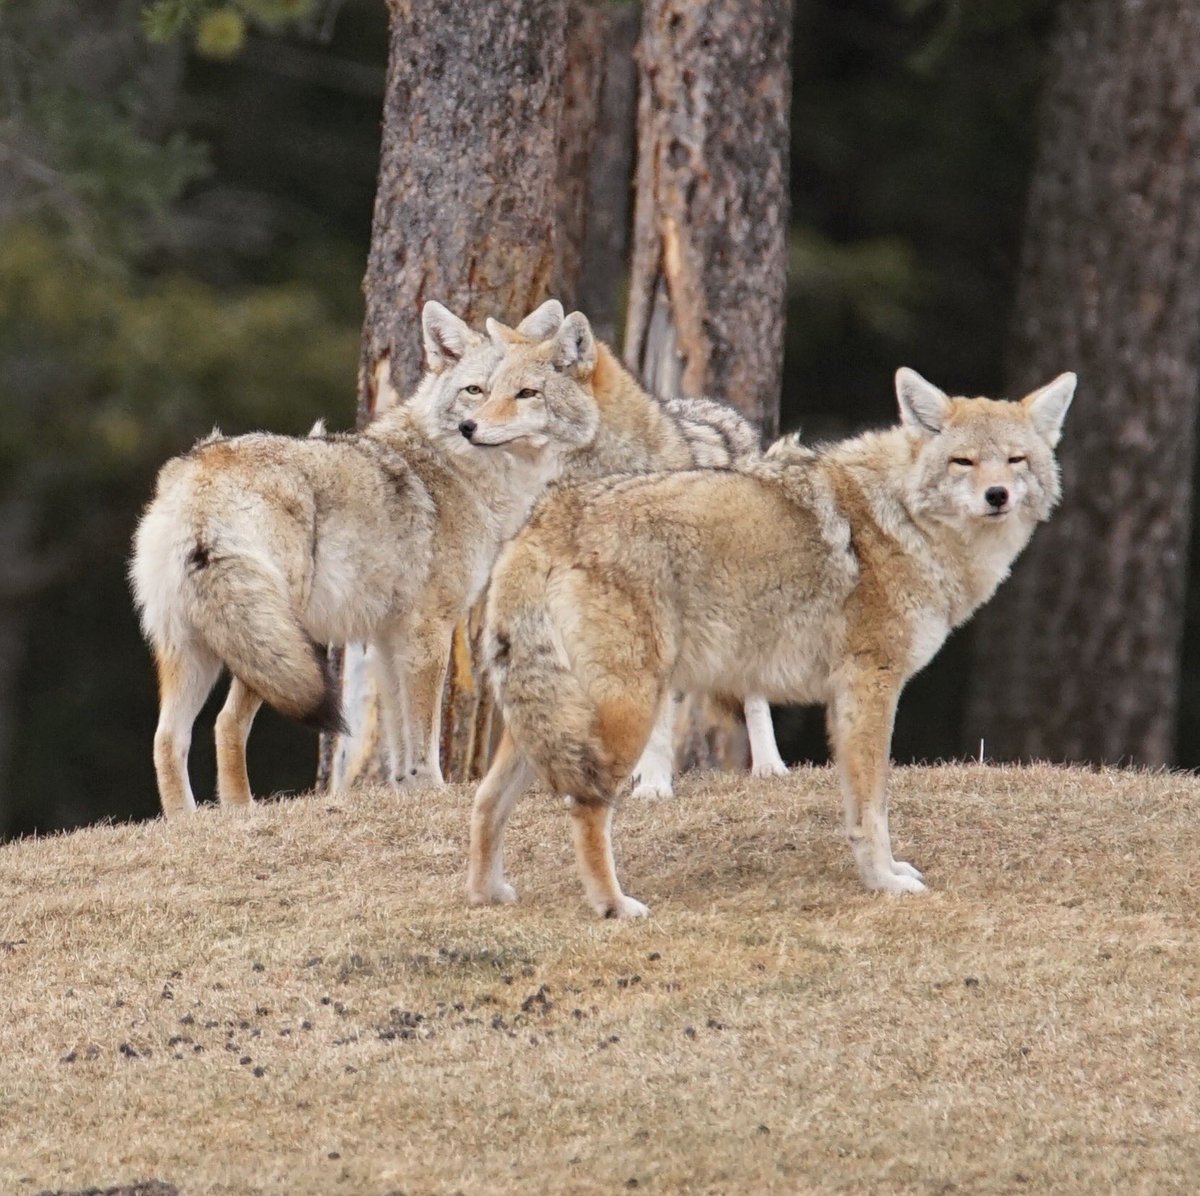 Happy Family Day! 📷Stacey Sartoretto #FamilyDay #coyotes